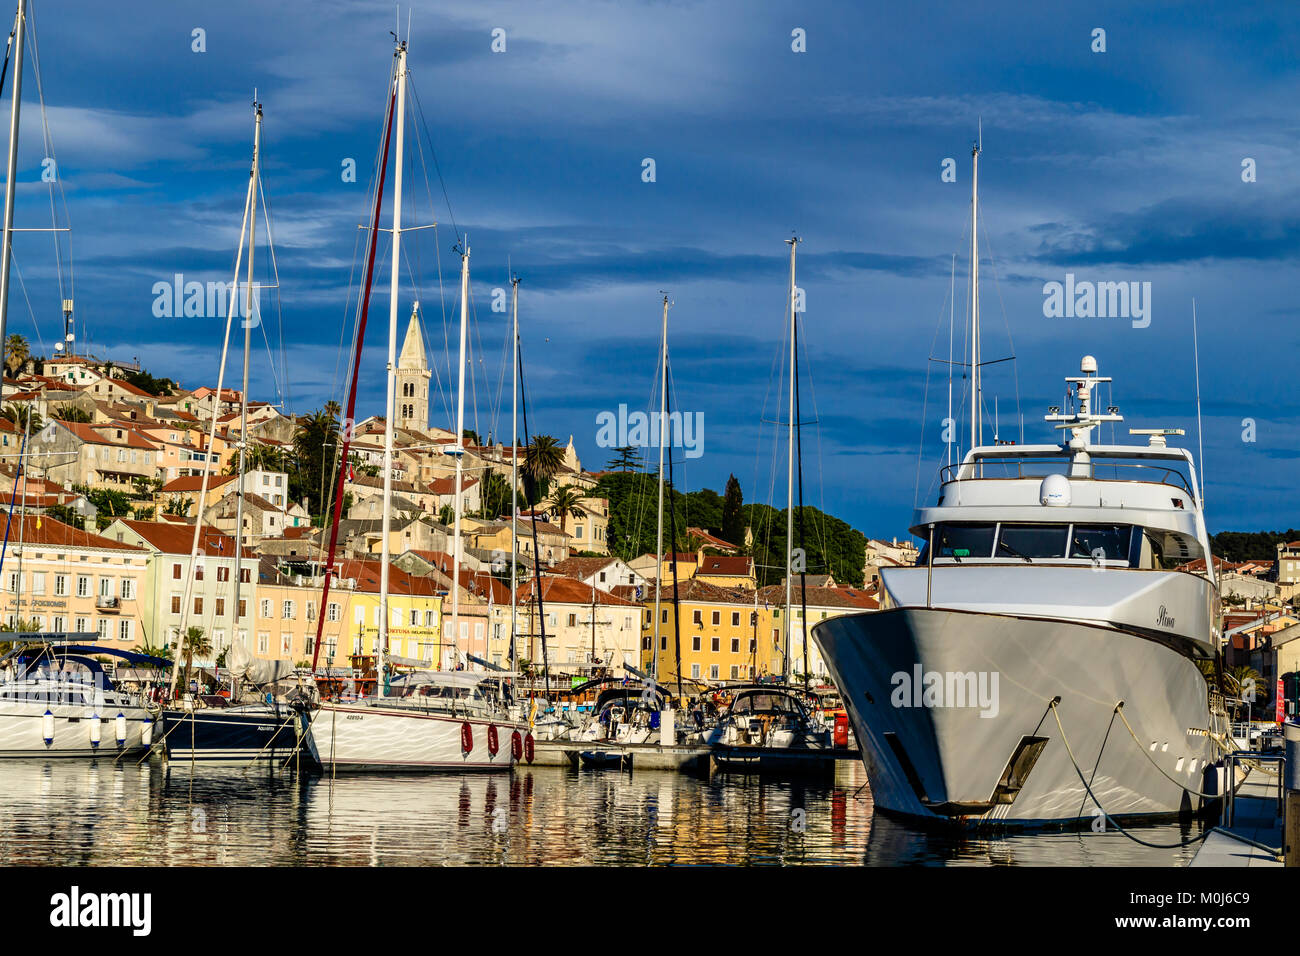 Mali Losinj harbour, island of Losinj, Croatia. May 2017. Stock Photo